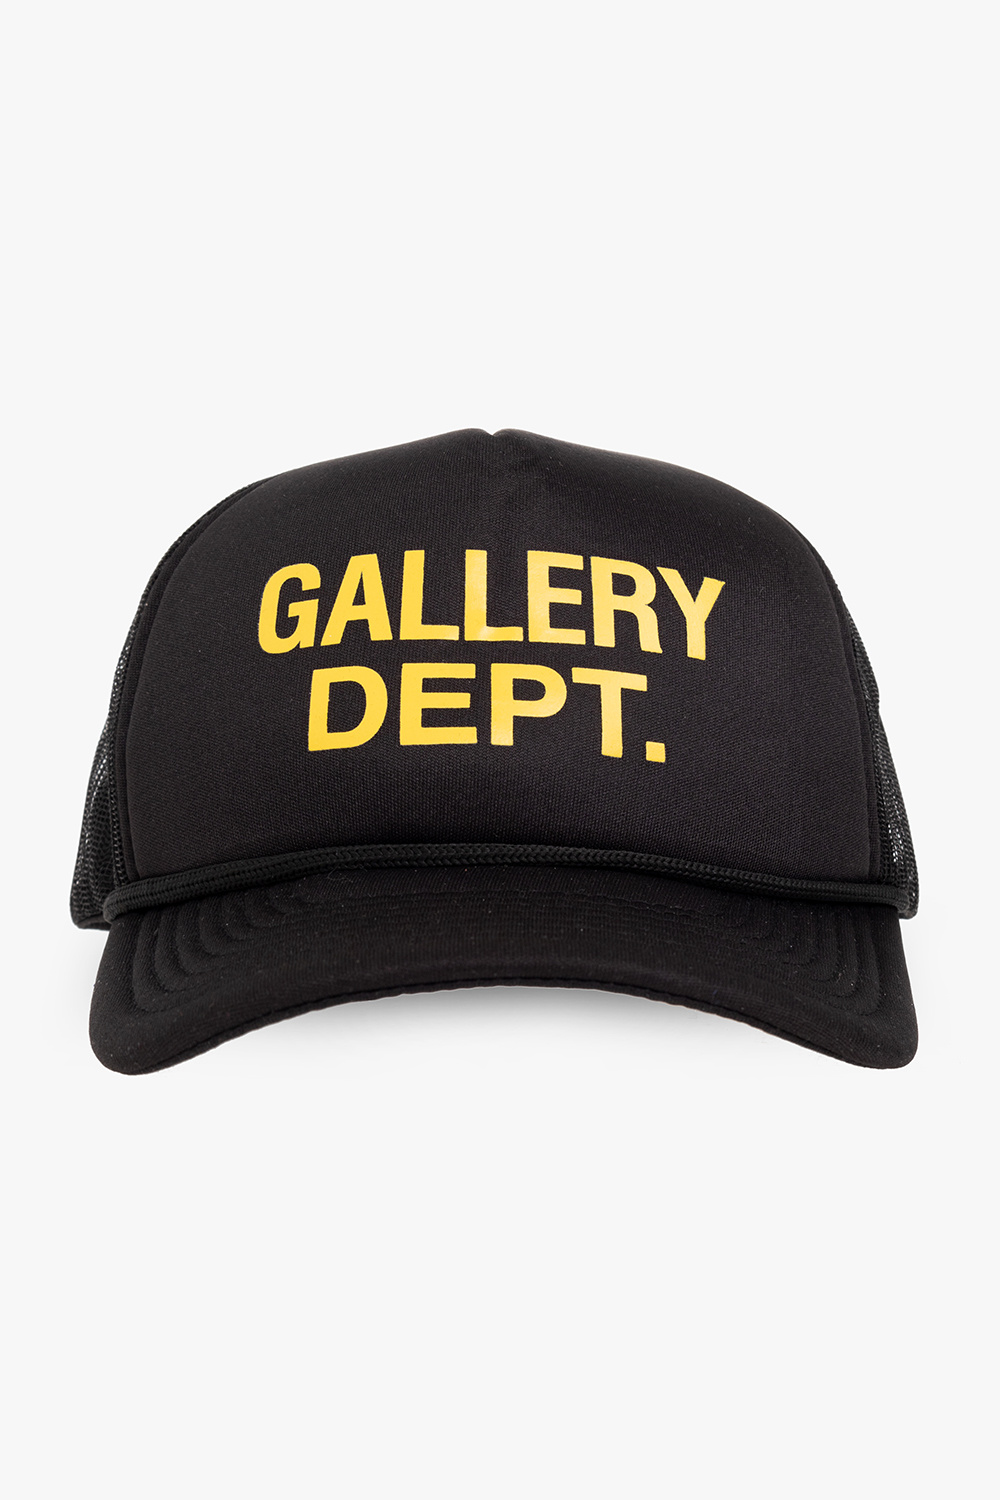 Black Baseball cap GALLERY DEPT. - Vitkac France